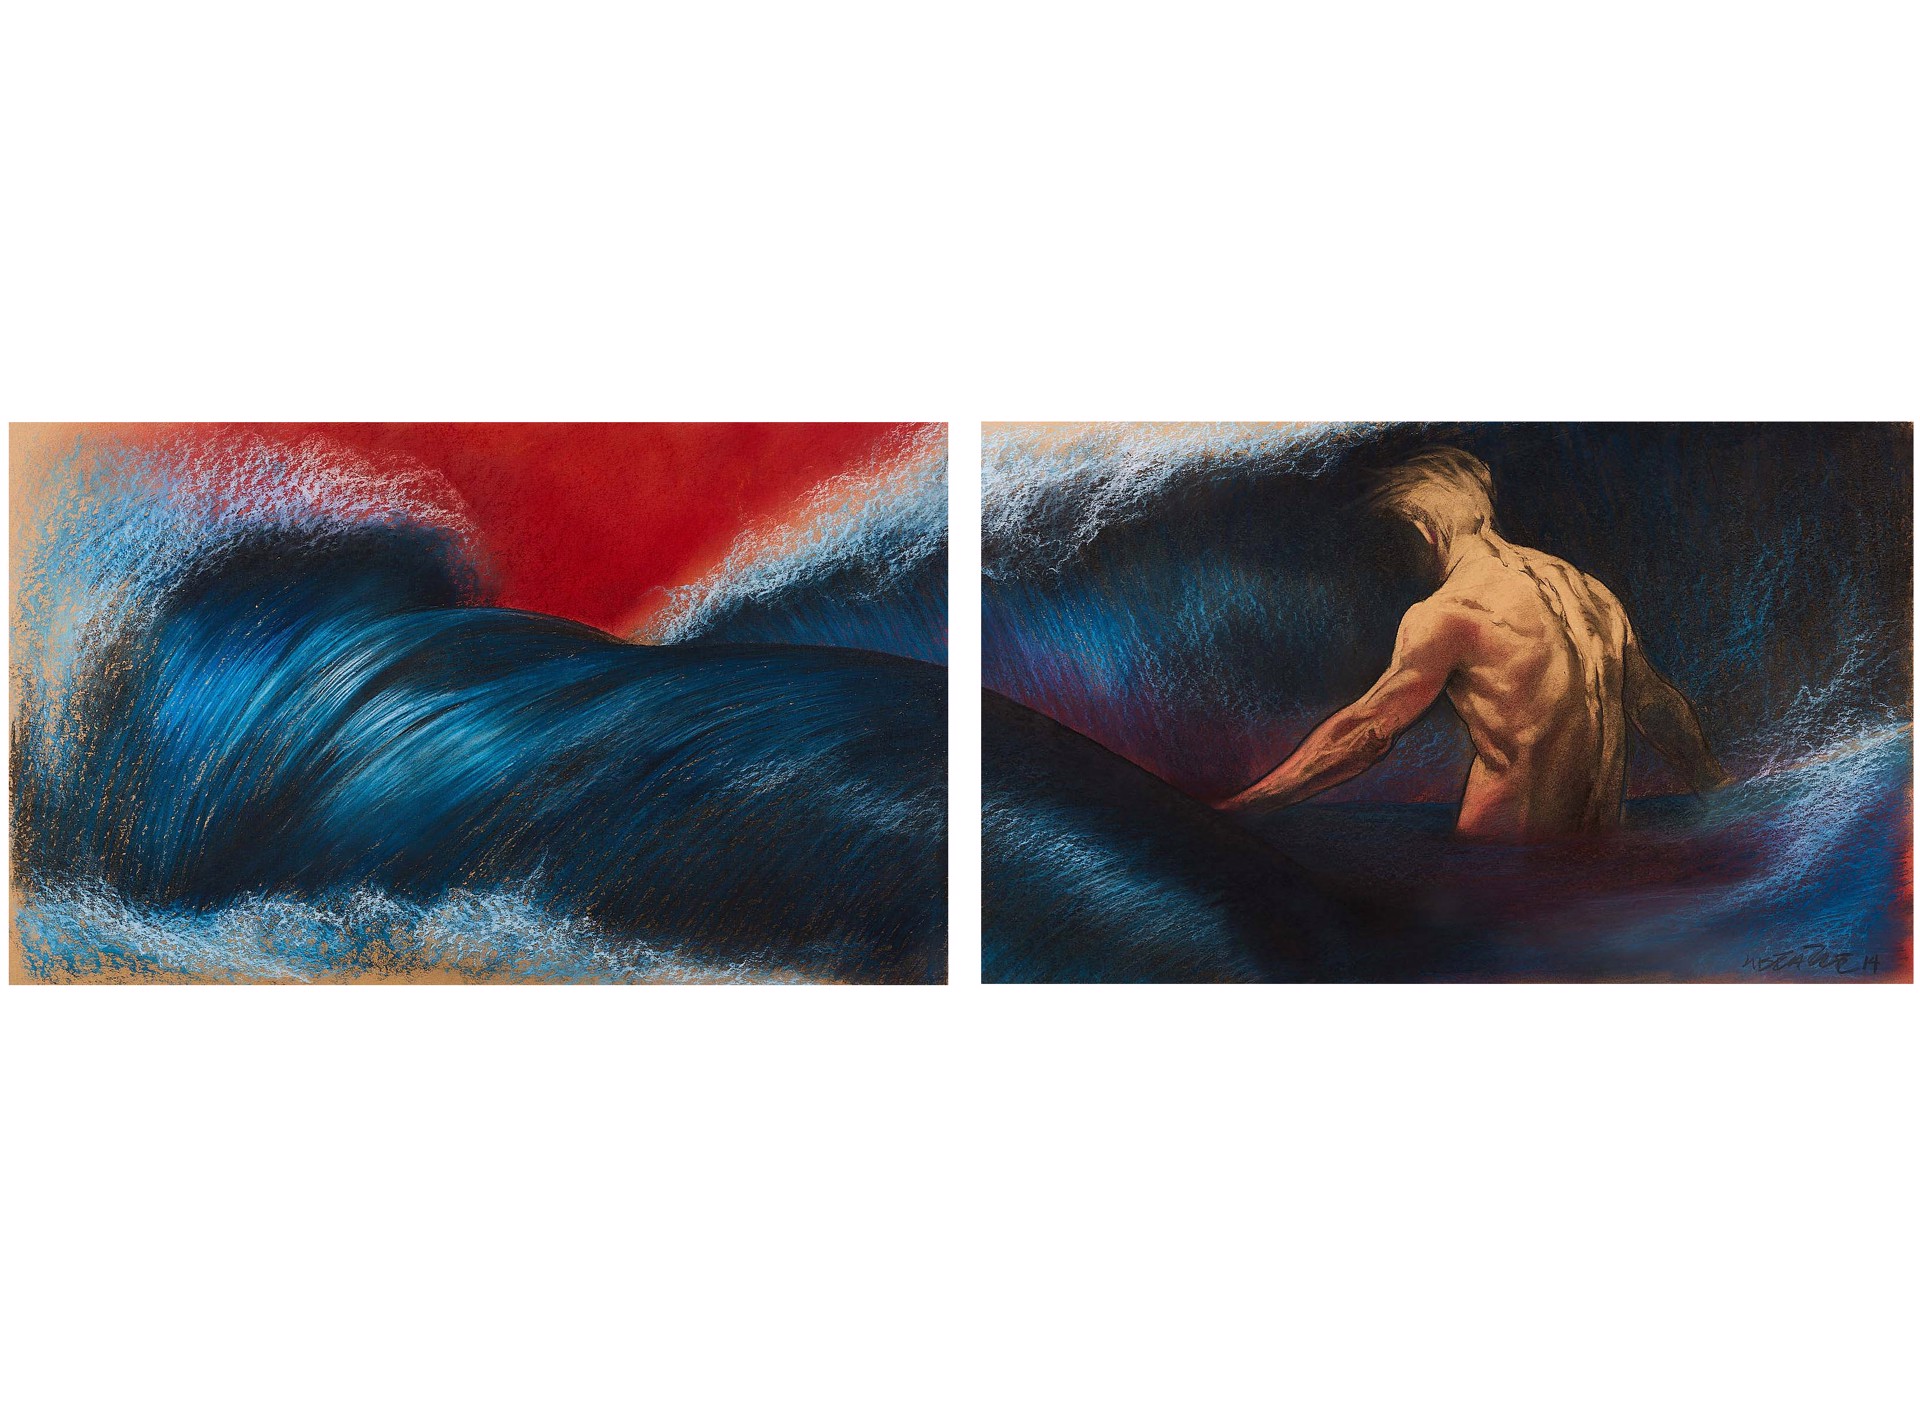 Les Fleurs du Mal, L'Homme et la Mer (Man and the Sea) (Dyptich) by Tanino Liberatore